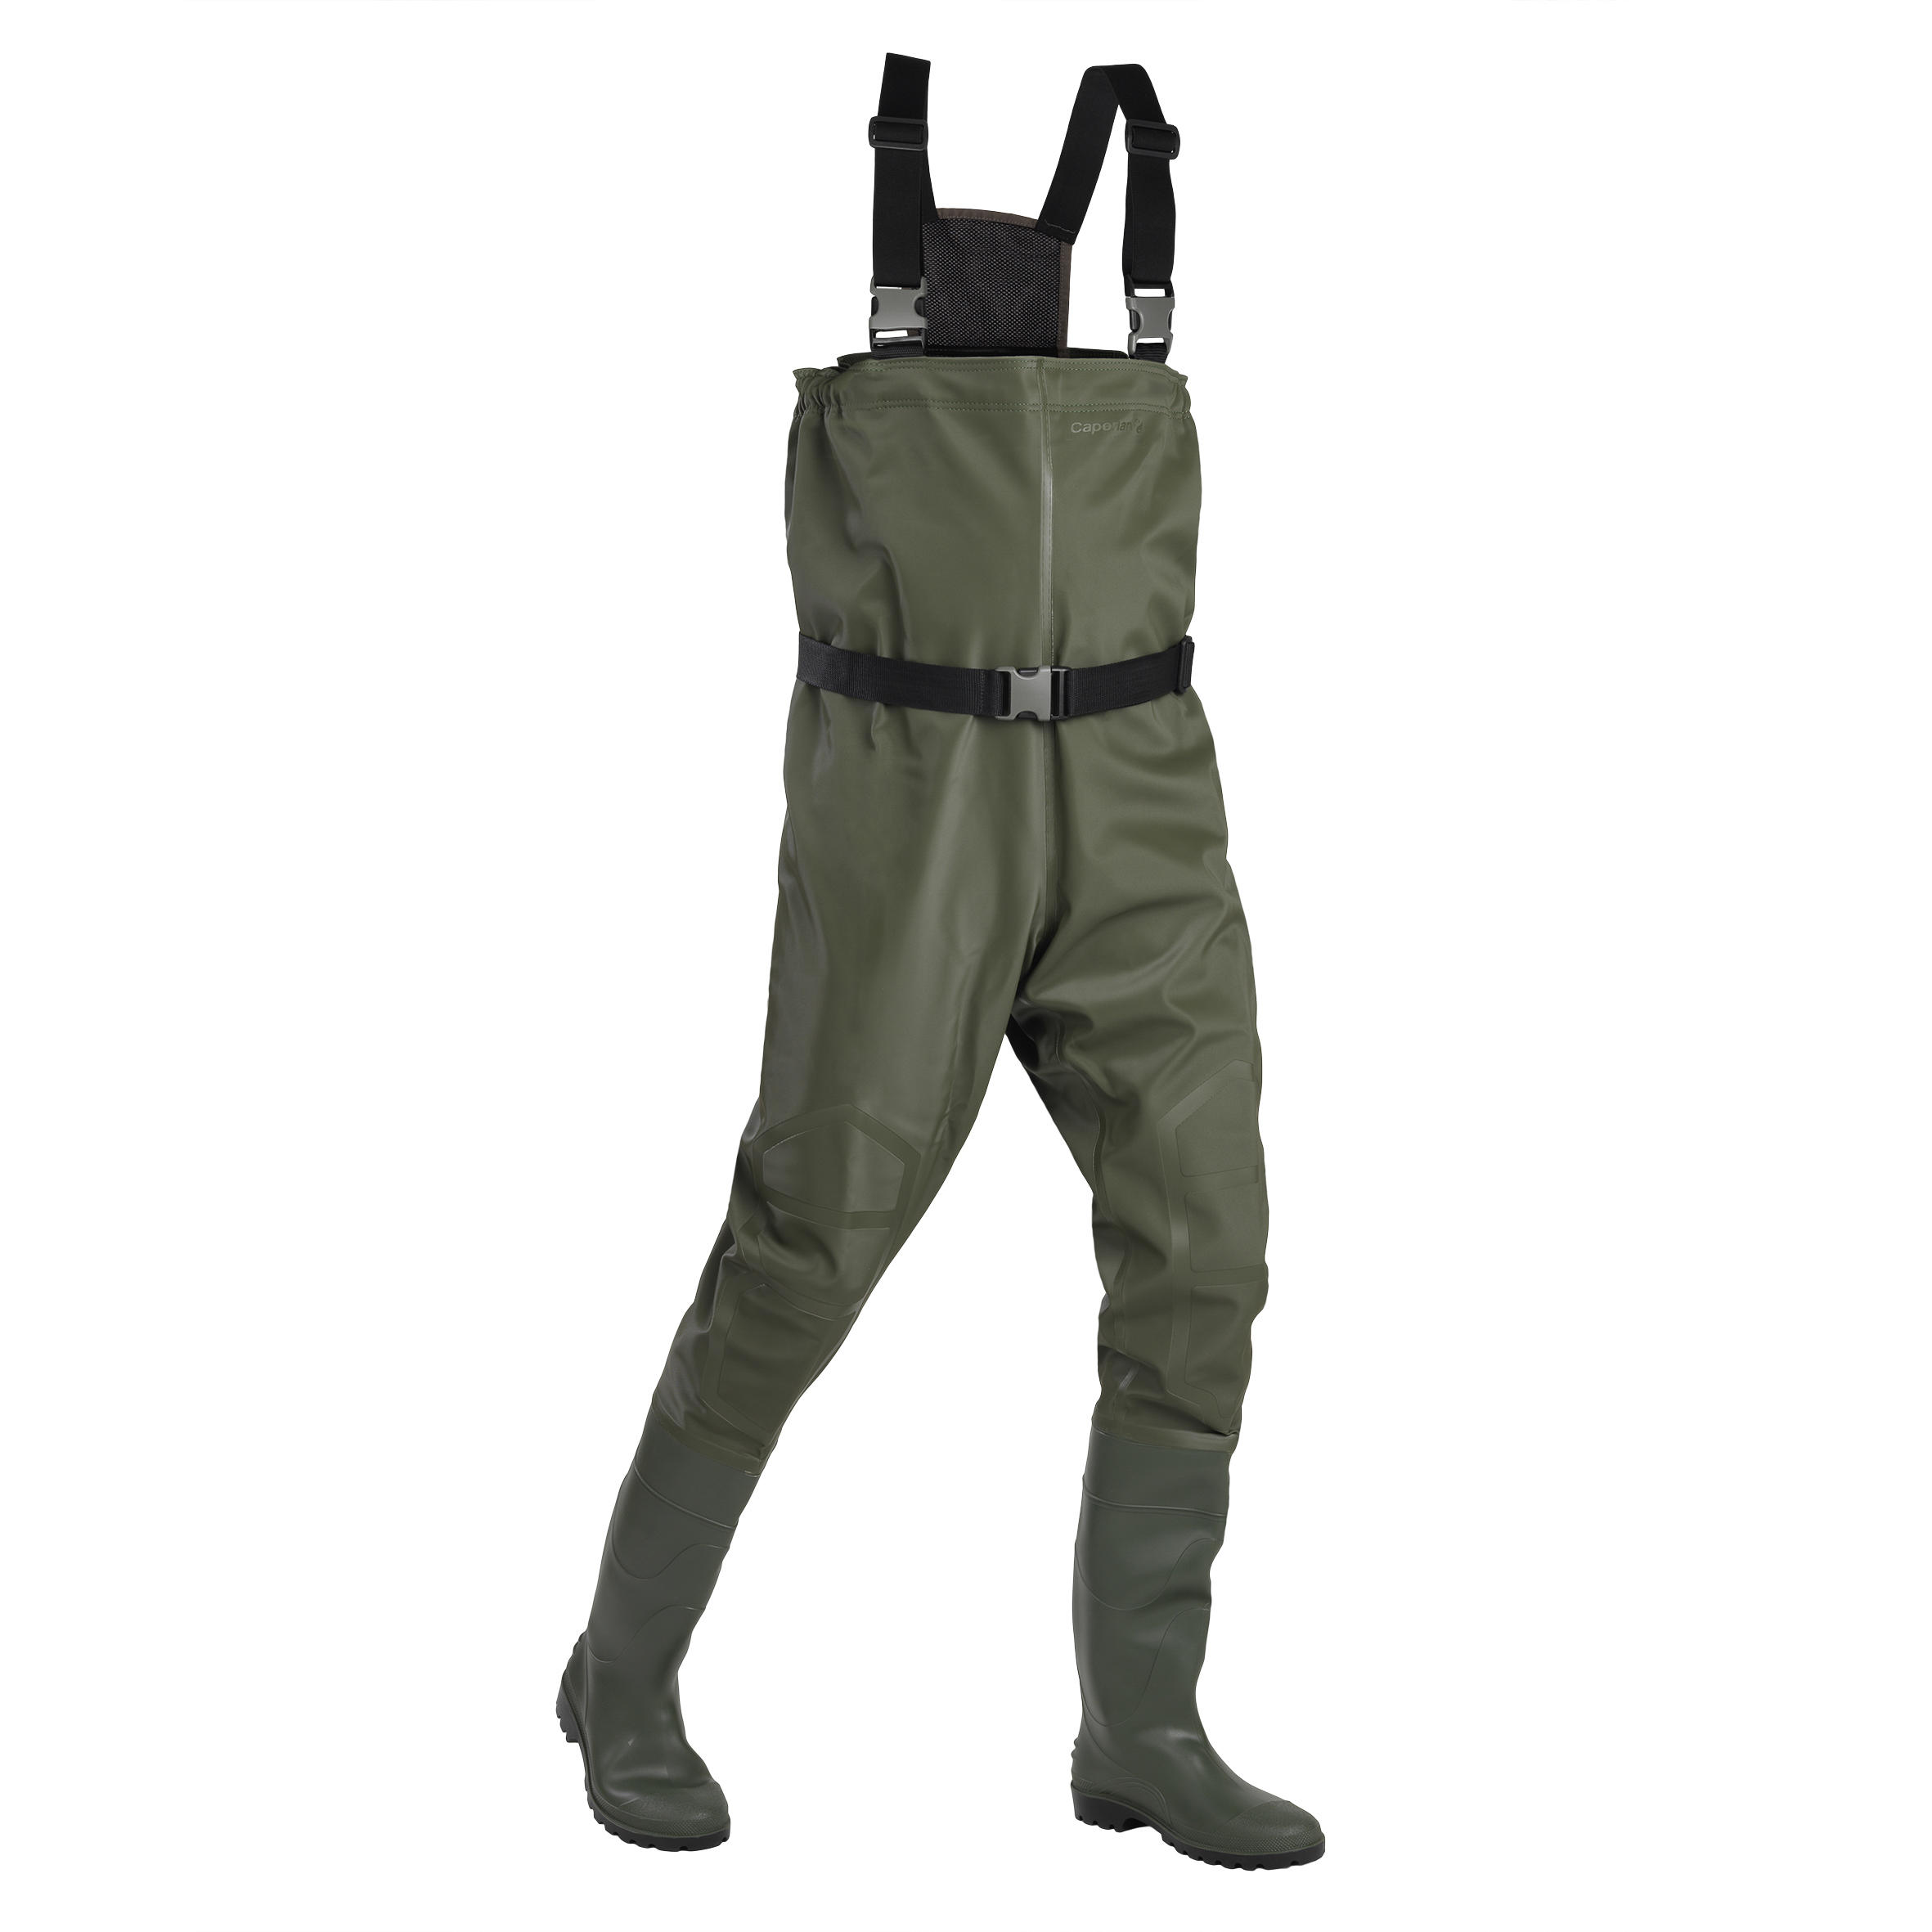 Fishing Breathable PVC Waders - 500 - Ash khaki green, Carbon grey -  Caperlan - Decathlon